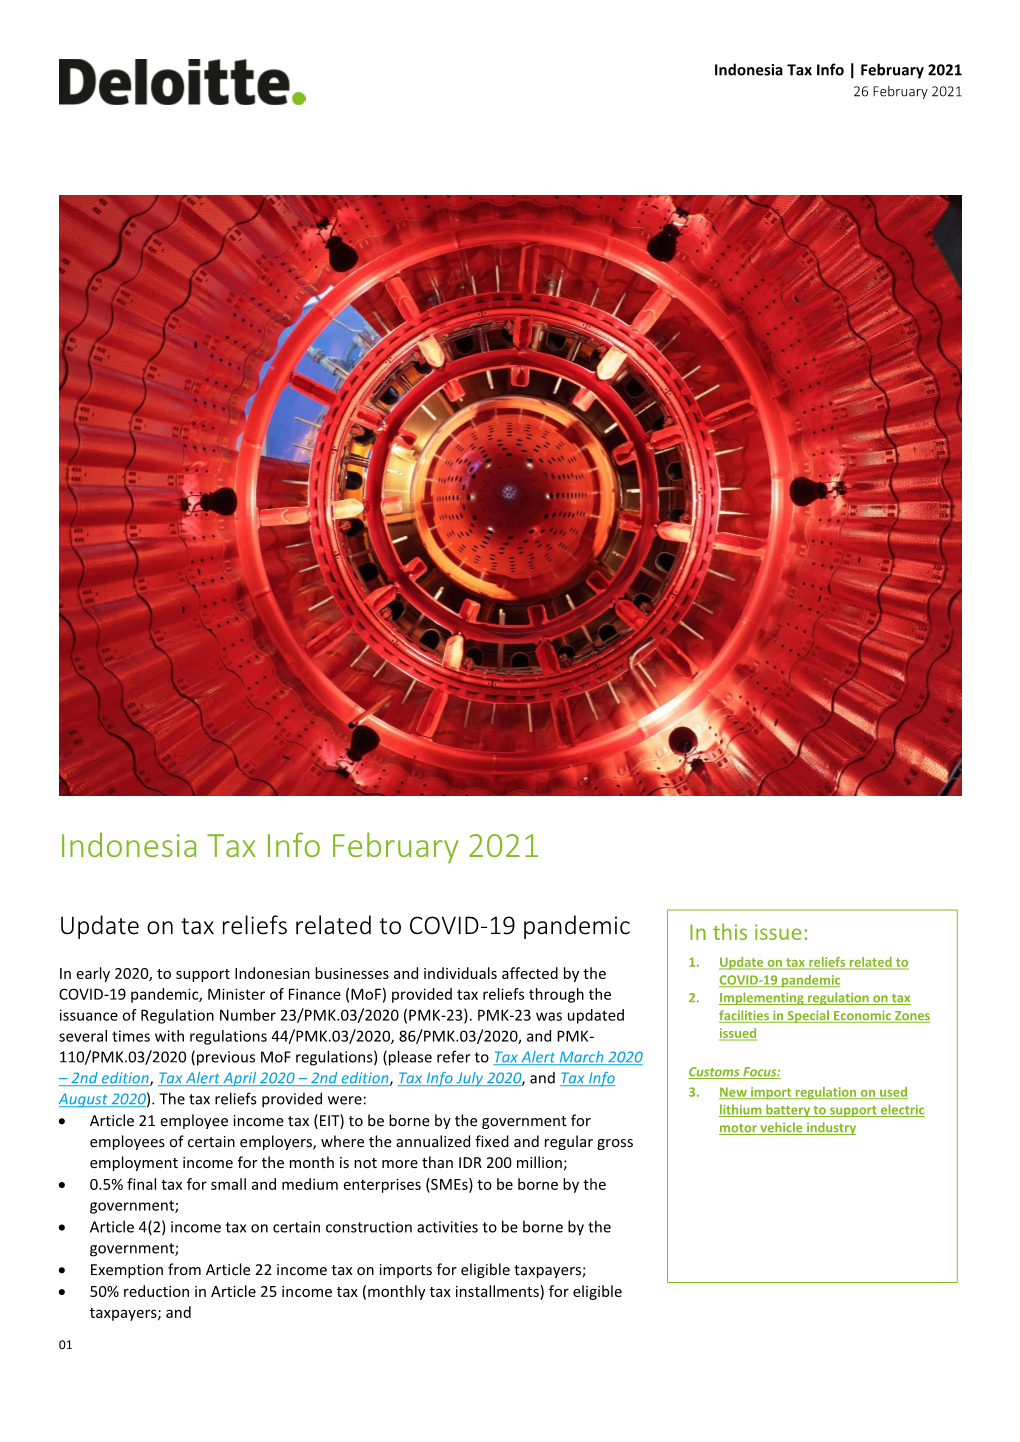 Indonesia Tax Info February 2021